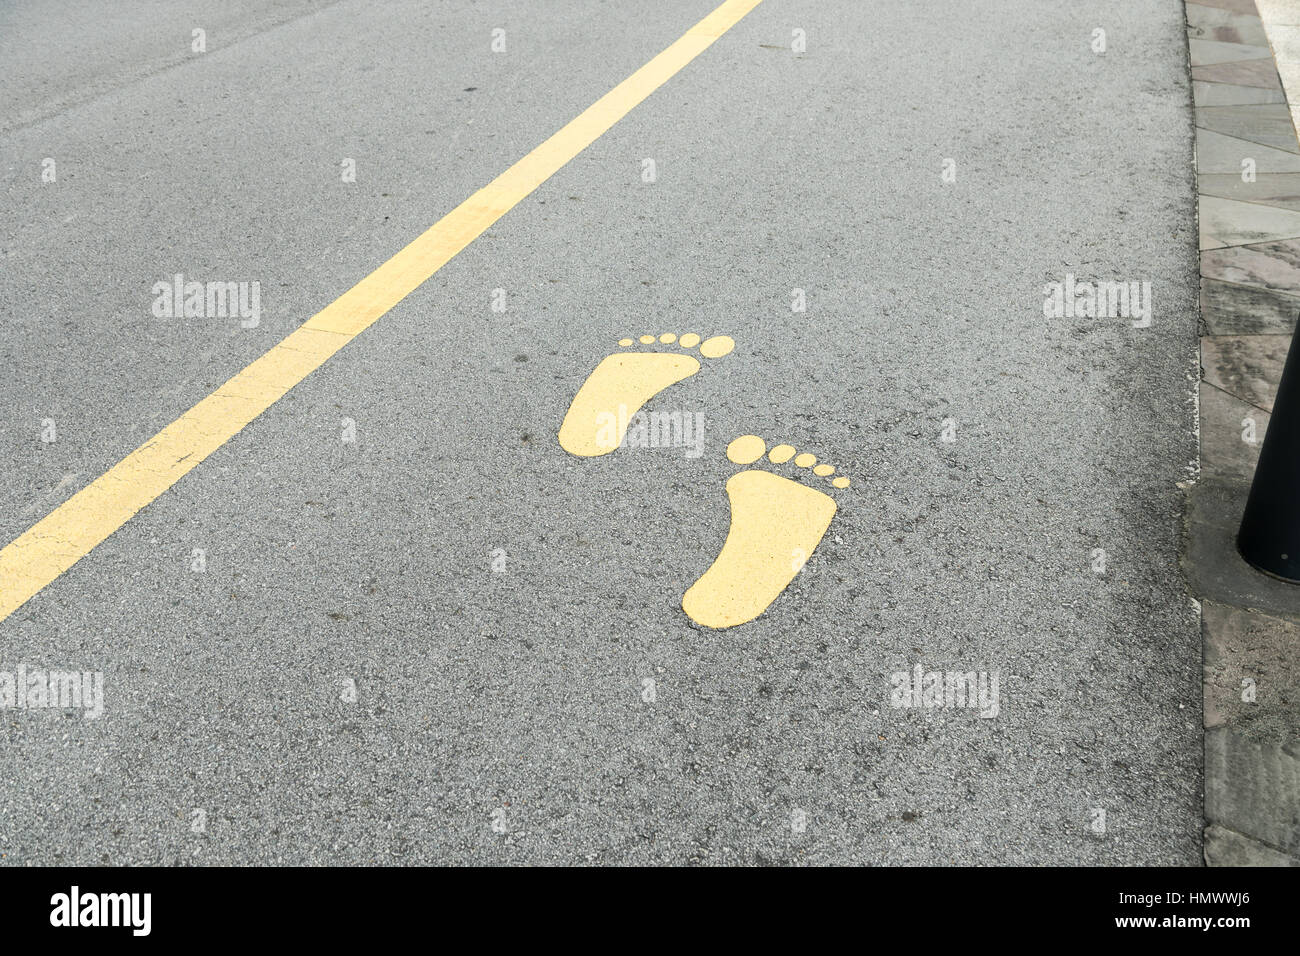 symbol of foot walk lane on road Stock Photo